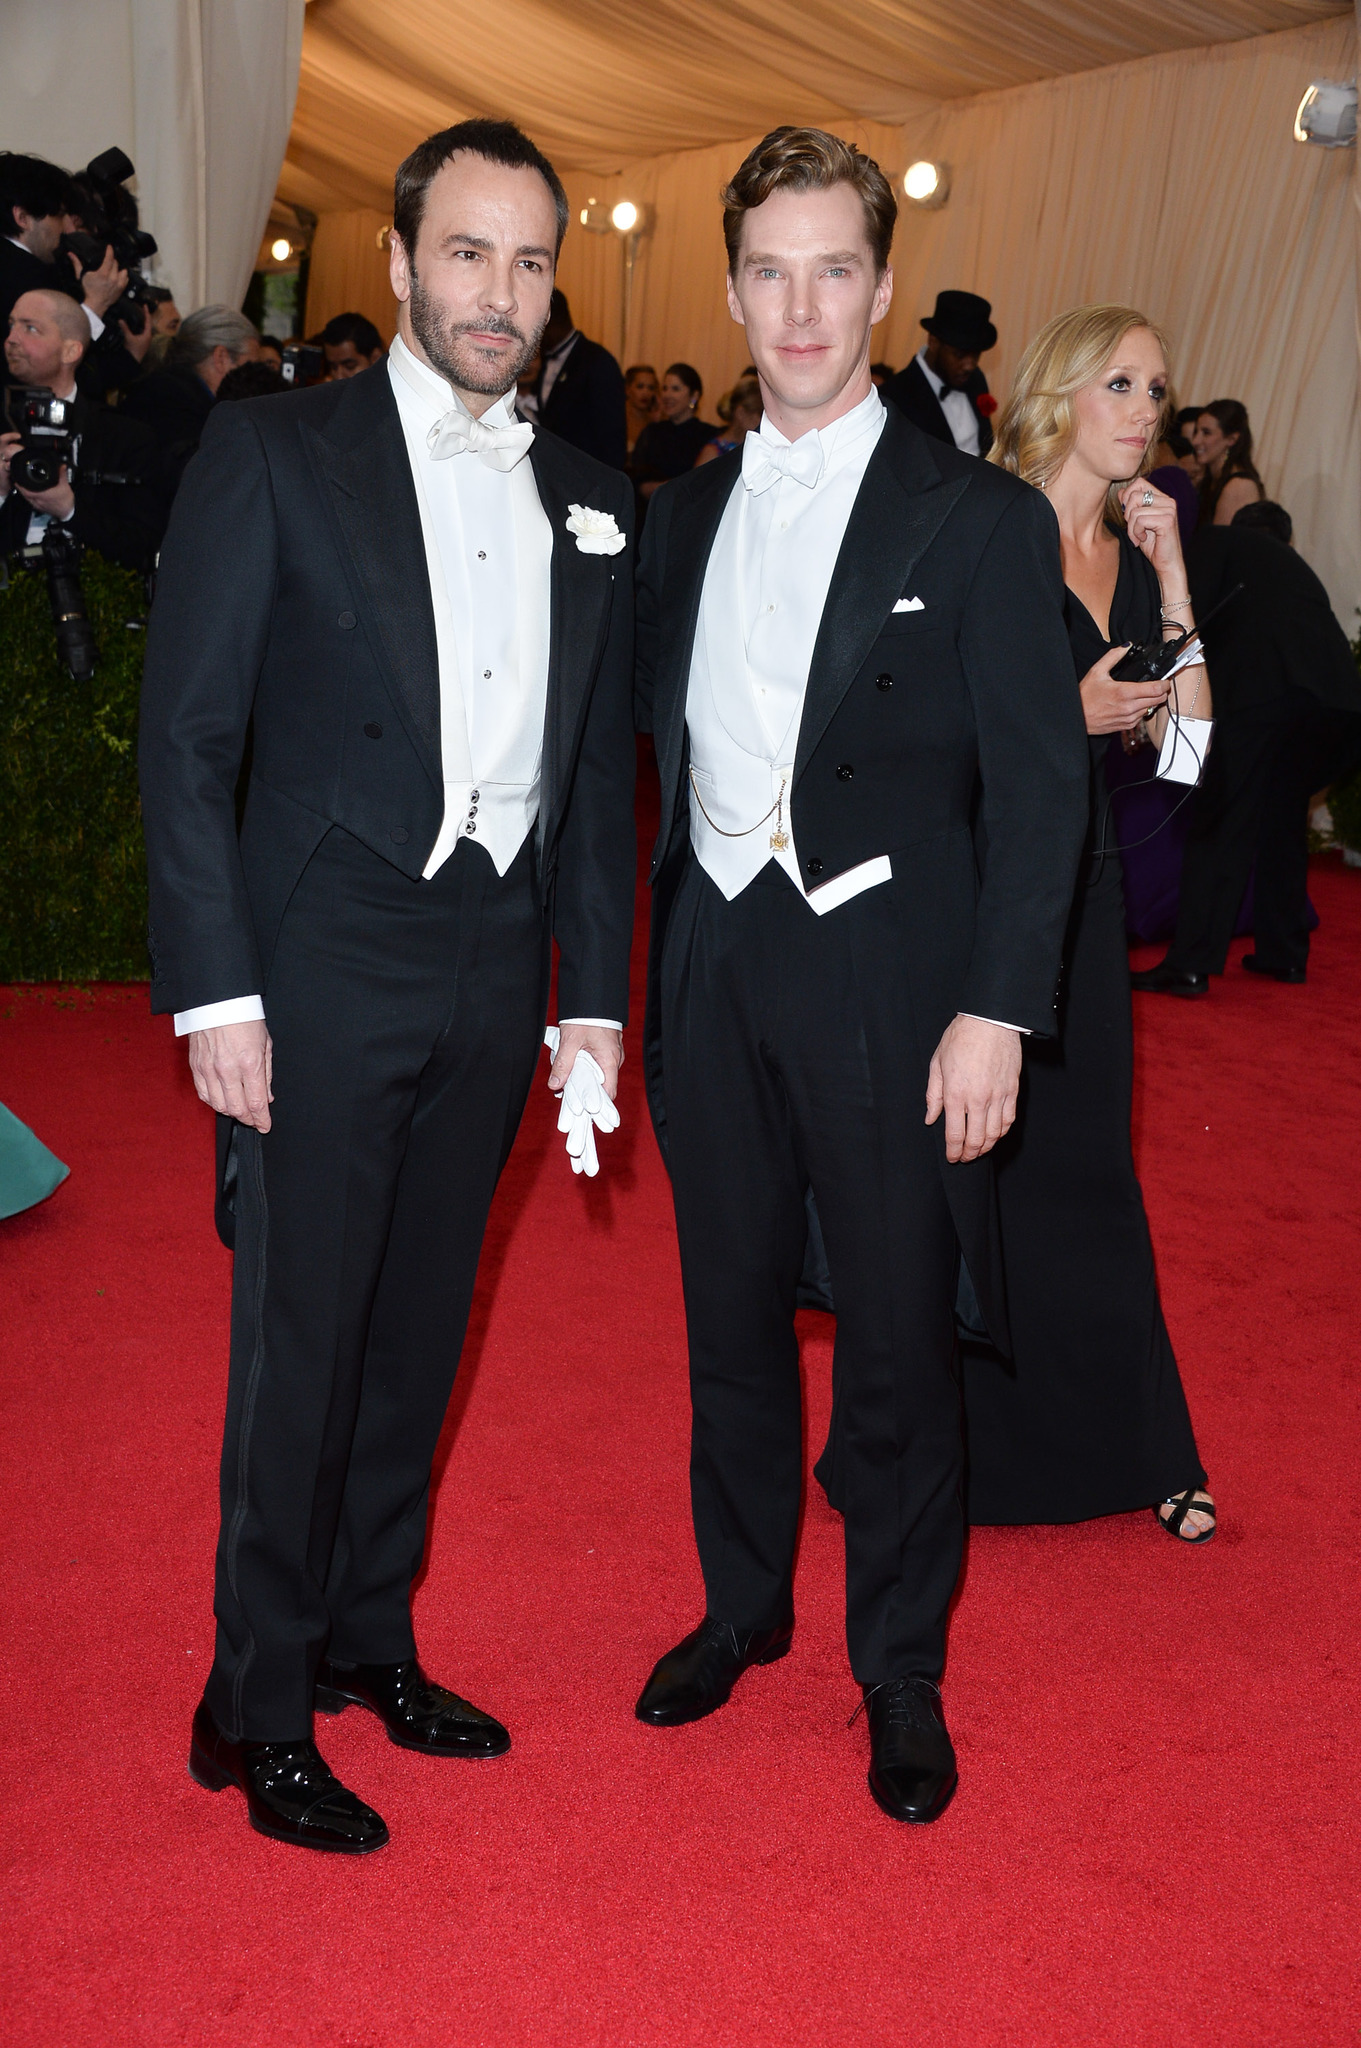 Tom Ford and Benedict Cumberbatch